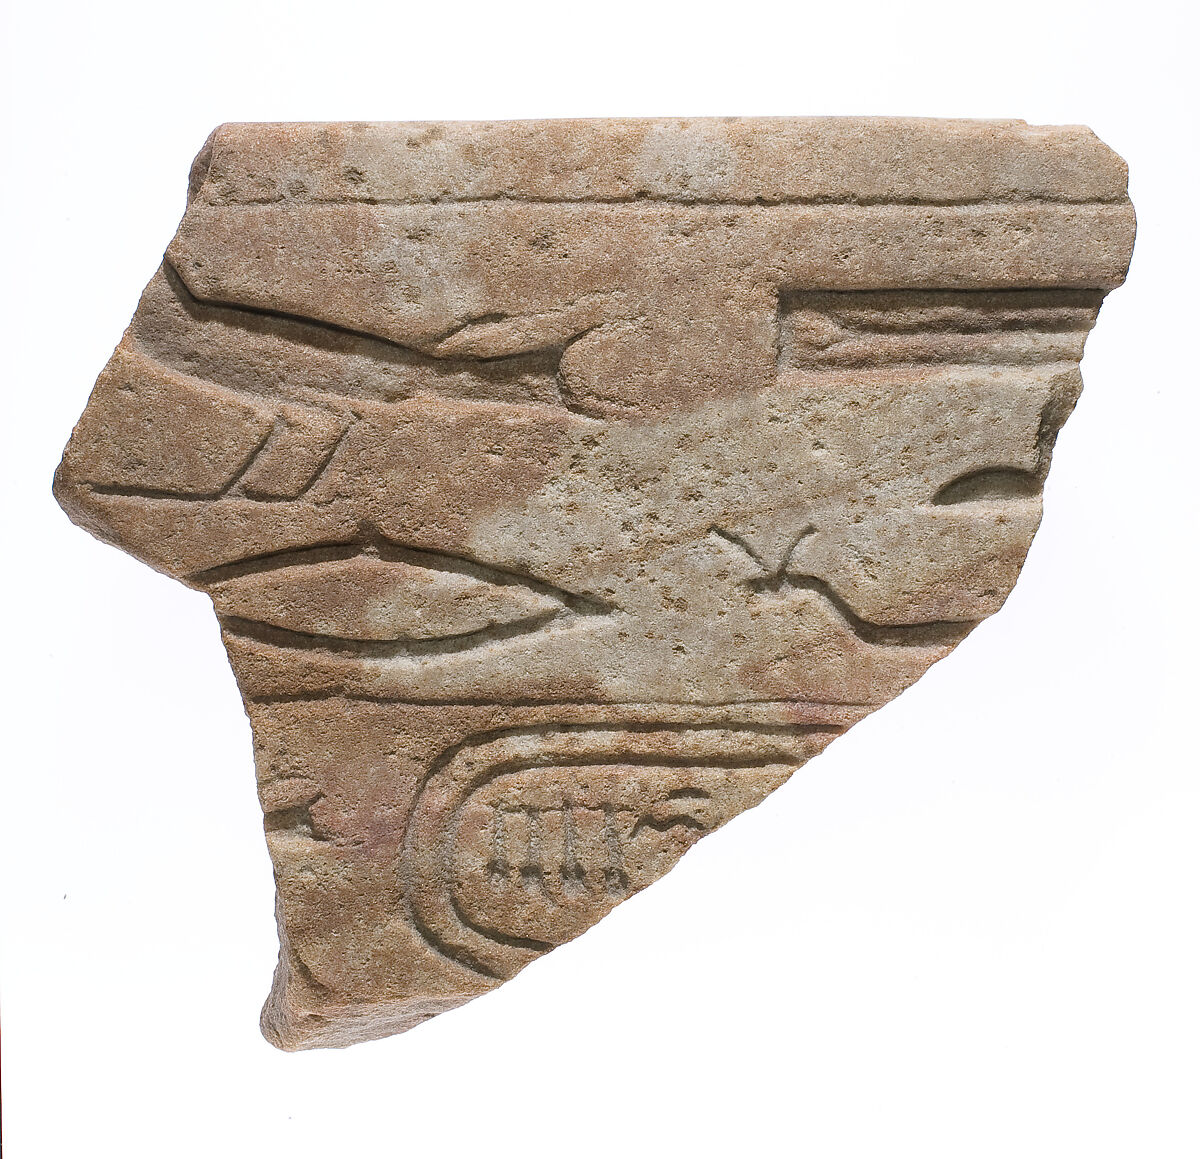 Block fragment with cartouche of Nefertiti, yellow quartzite 